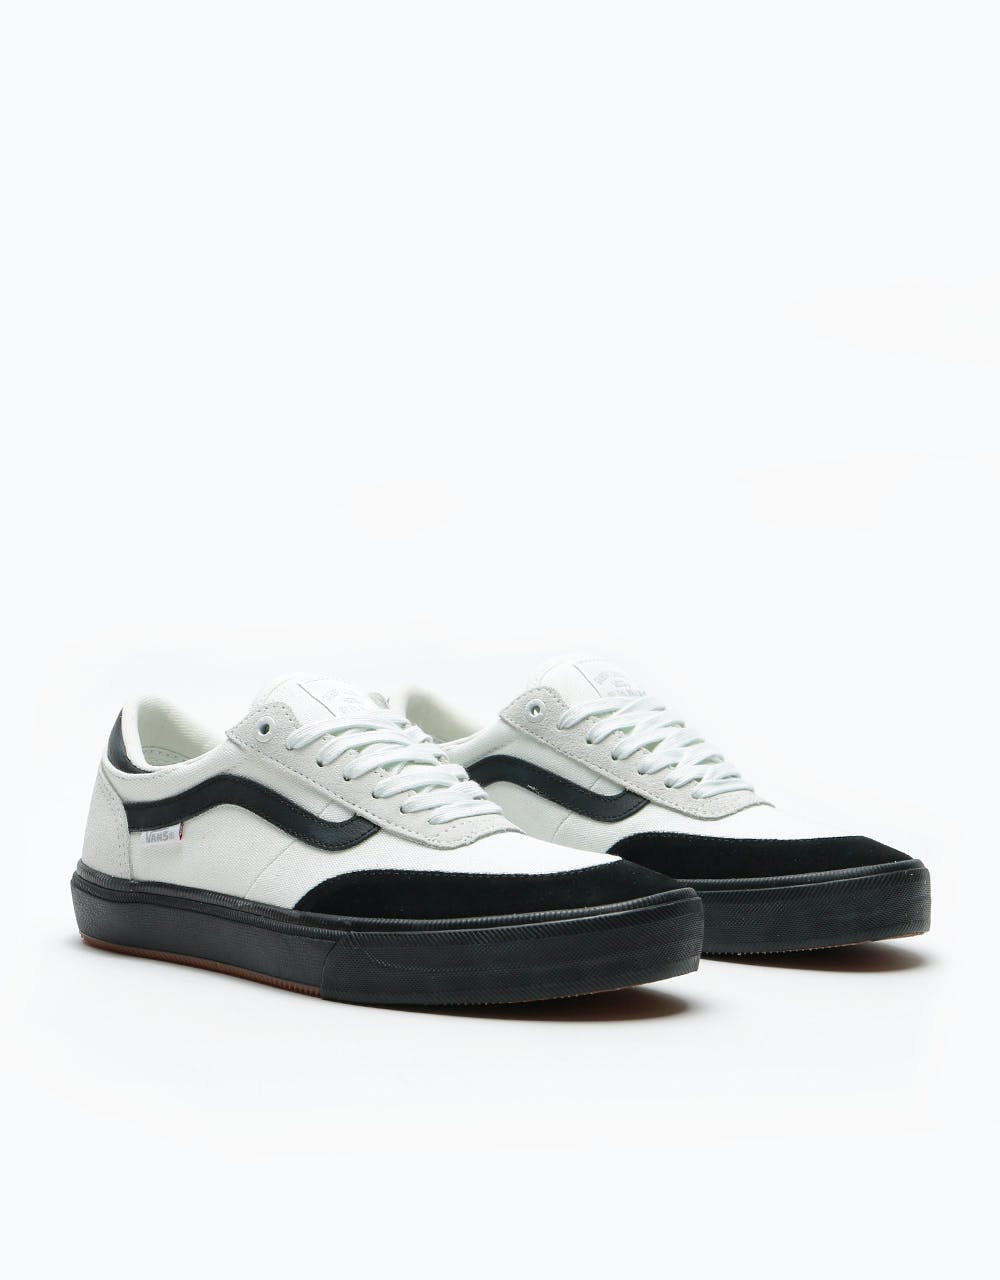 Vans Gilbert Crockett 2 Pro Skate Shoes - Pearl/Black